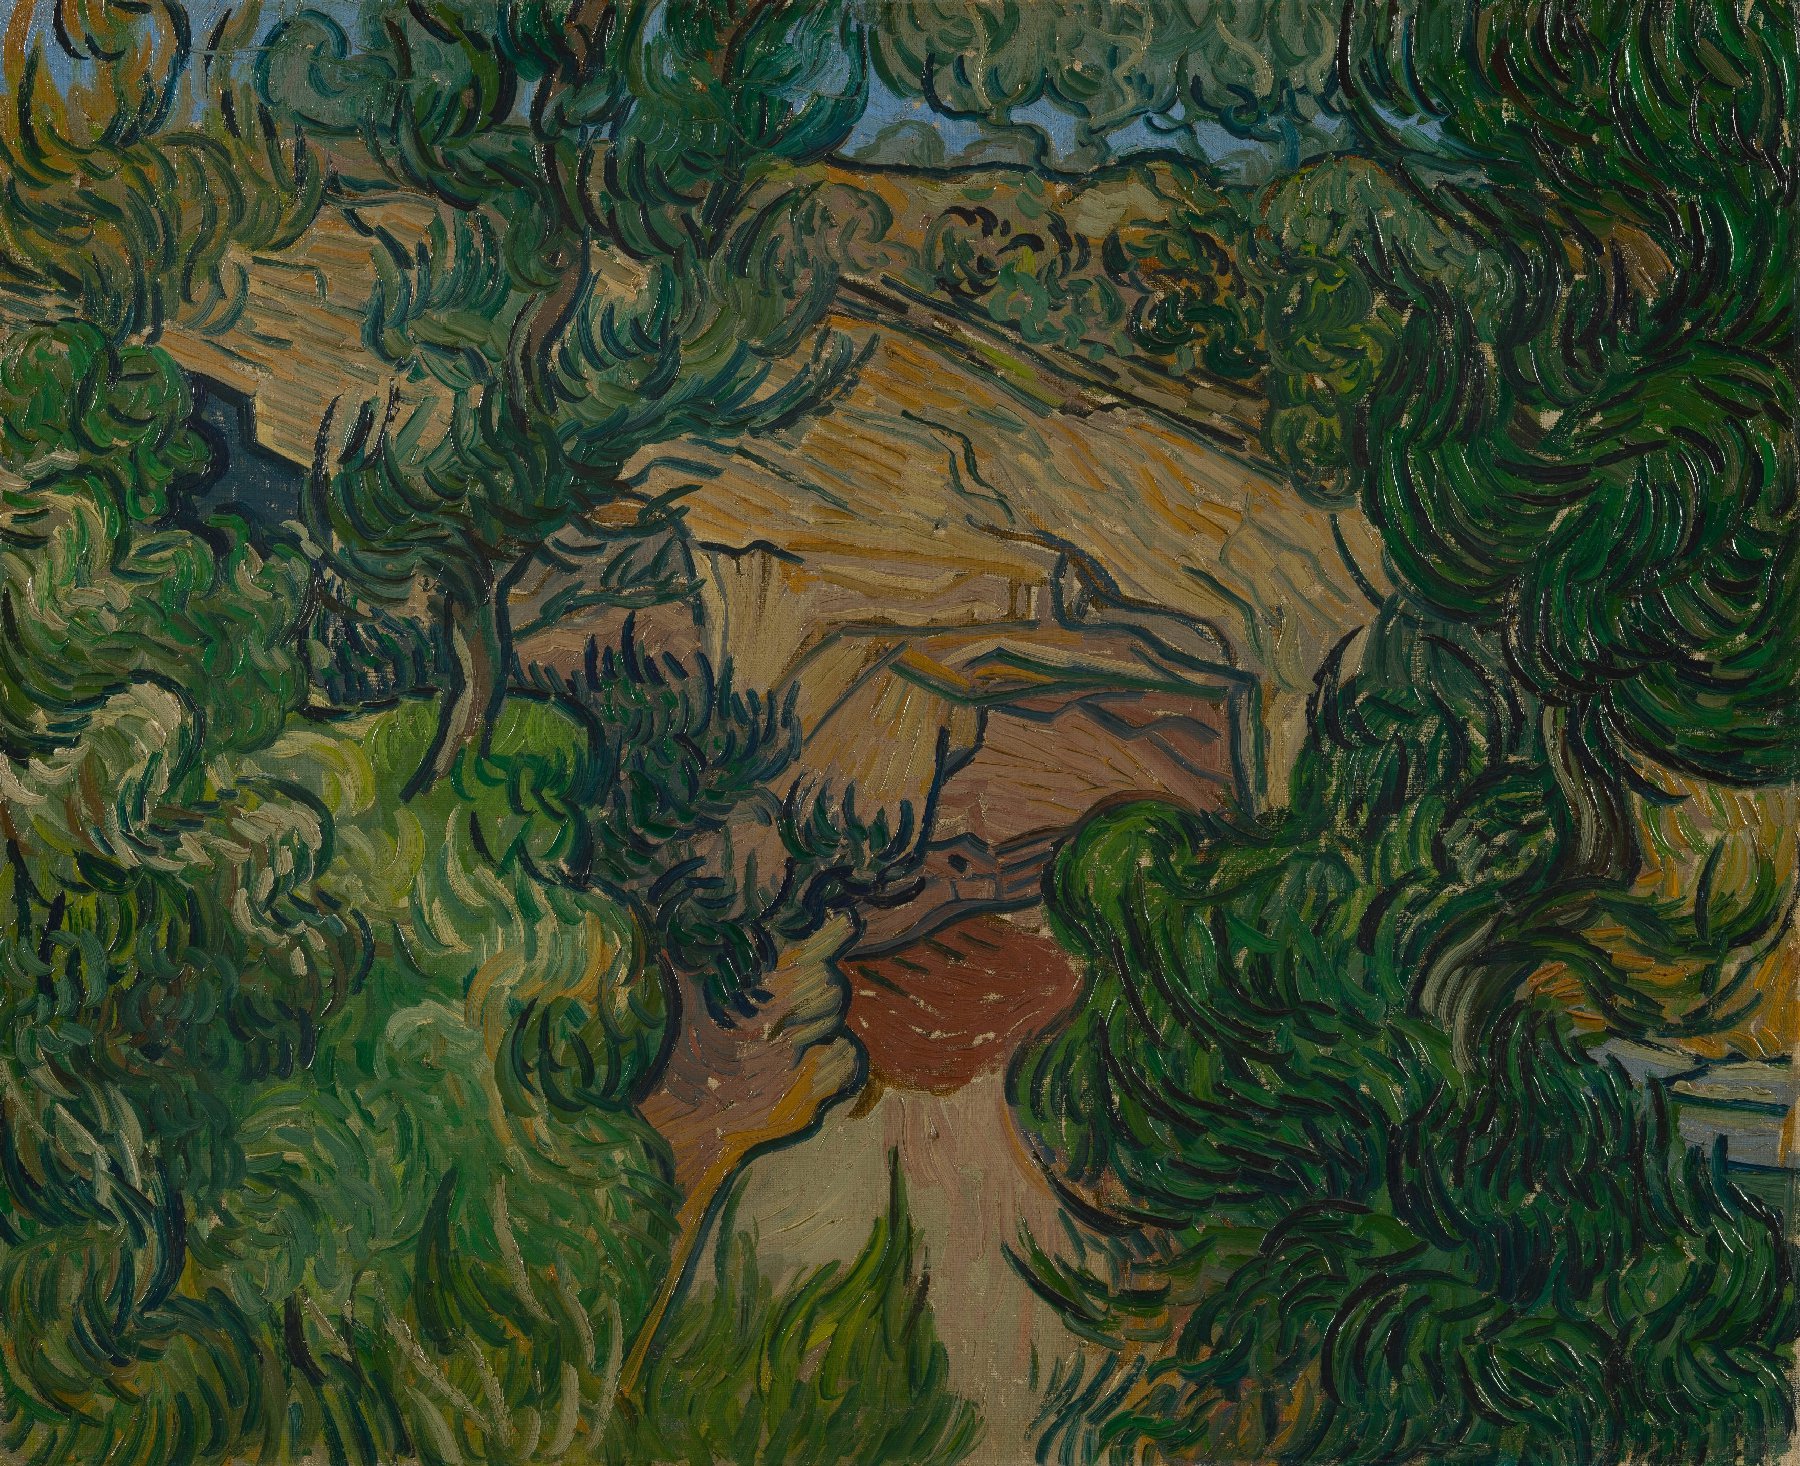 Ingang van een steengroeve Vincent van Gogh (1853 - 1890), Saint-Rémy-de-Provence, juli 1889